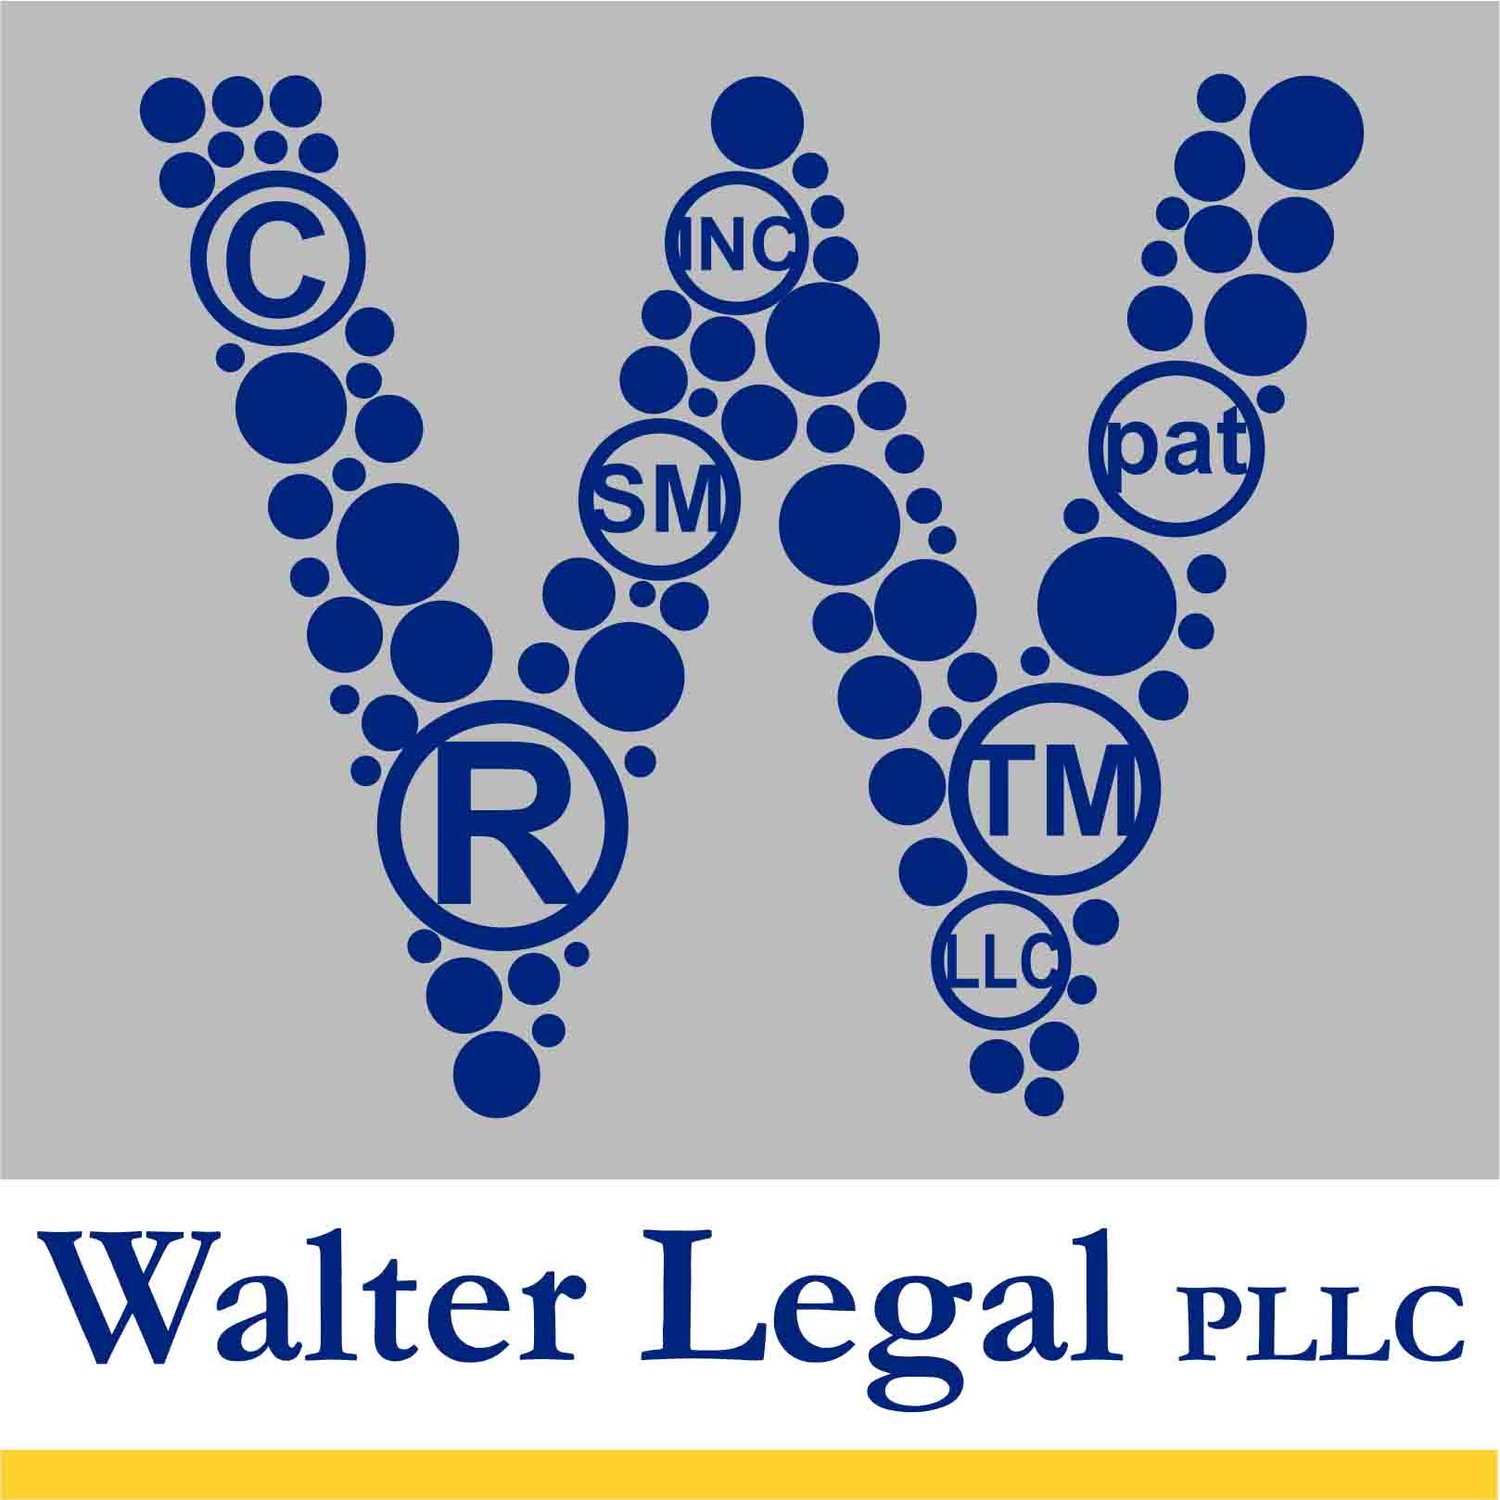 Walter Legal PLLC